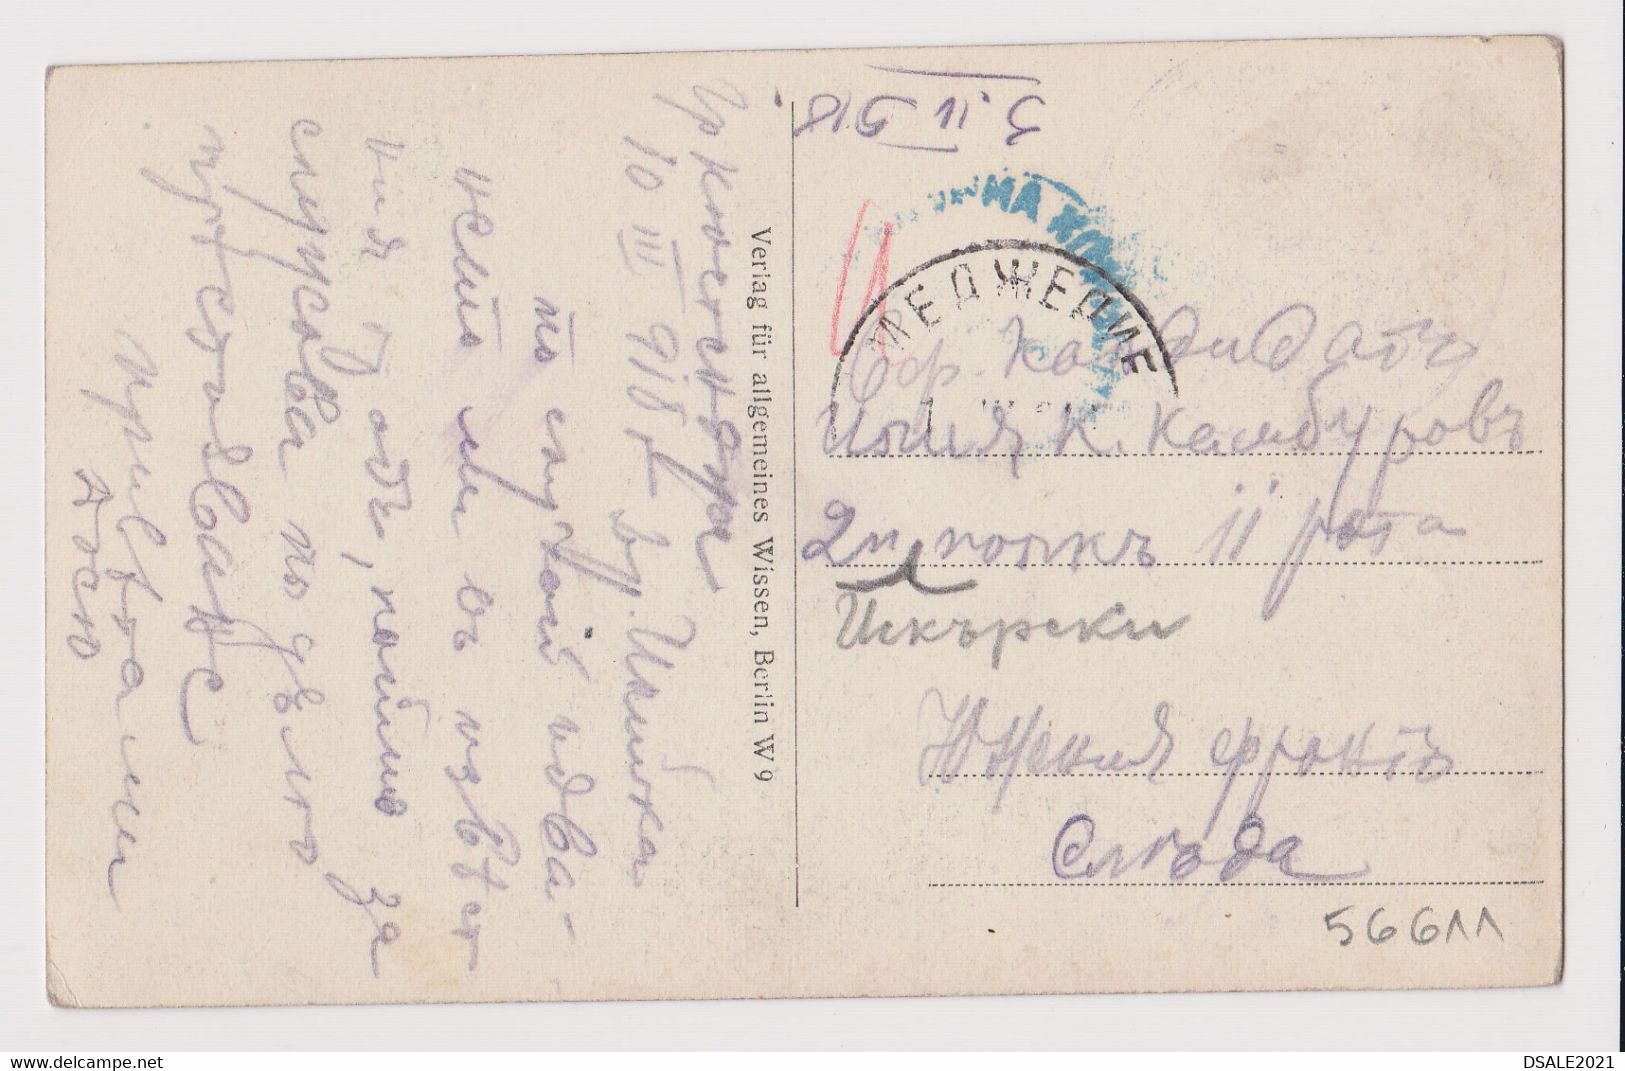 Romania CONSTANTA View Postcard Ww1-1918 Bulgaria Bulgarian Occ MEDGIDIA Clear Cachet (56611) - Guerre